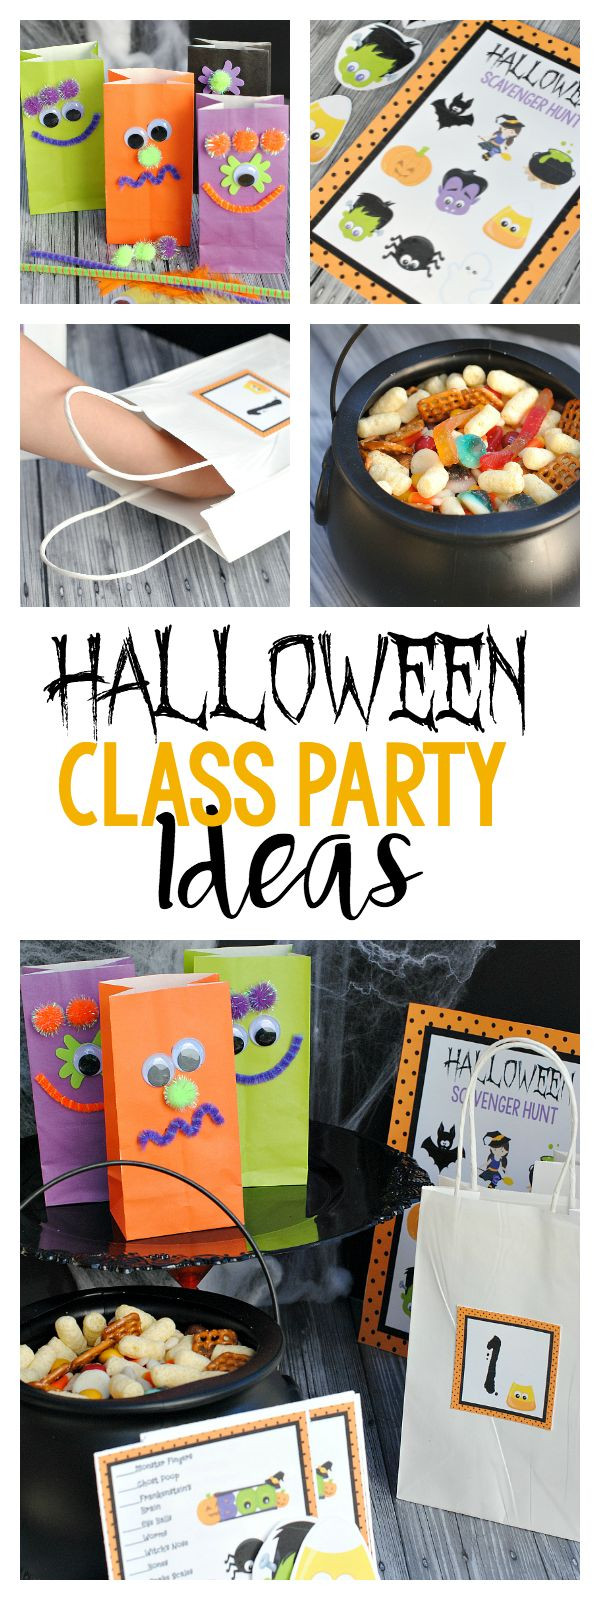 Halloween Classroom Party Ideas
 Best 25 Halloween class party ideas on Pinterest